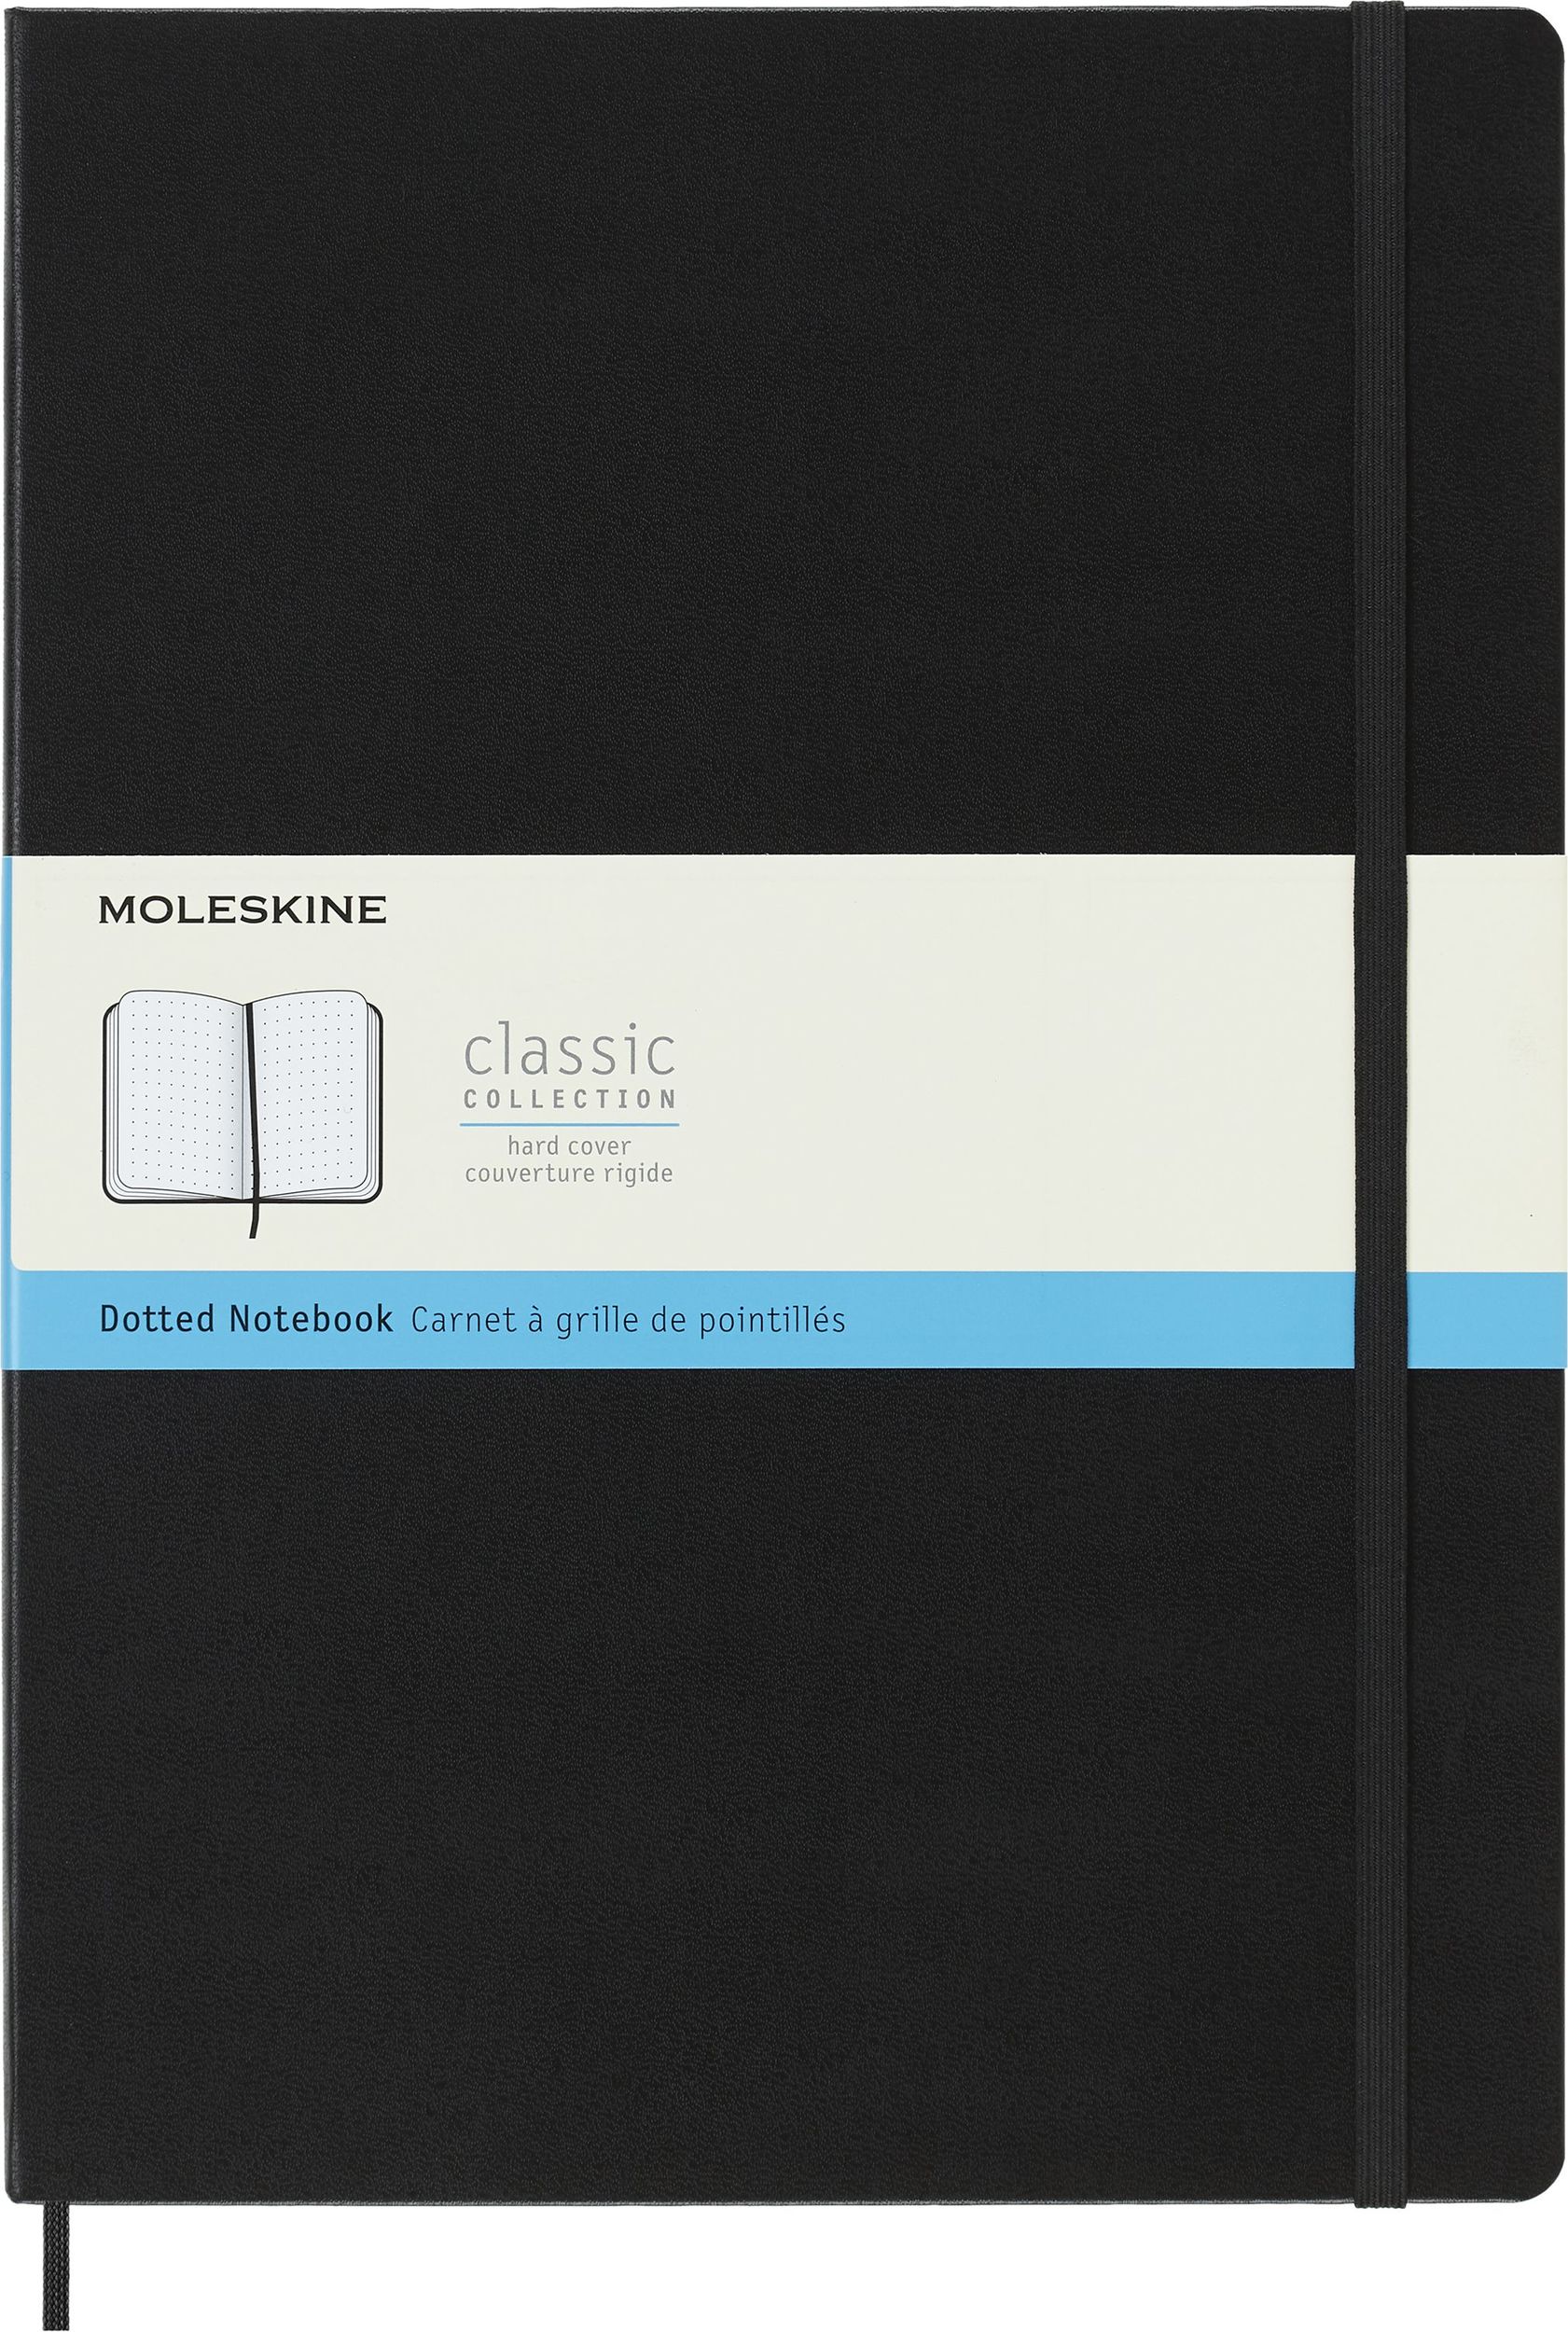 https://3fa-media.com/moleskine/moleskine-moleskine-classic-notes-a4-192-pages-black-spotted-hardcover__124781_03057ec-s2500x2500.jpg